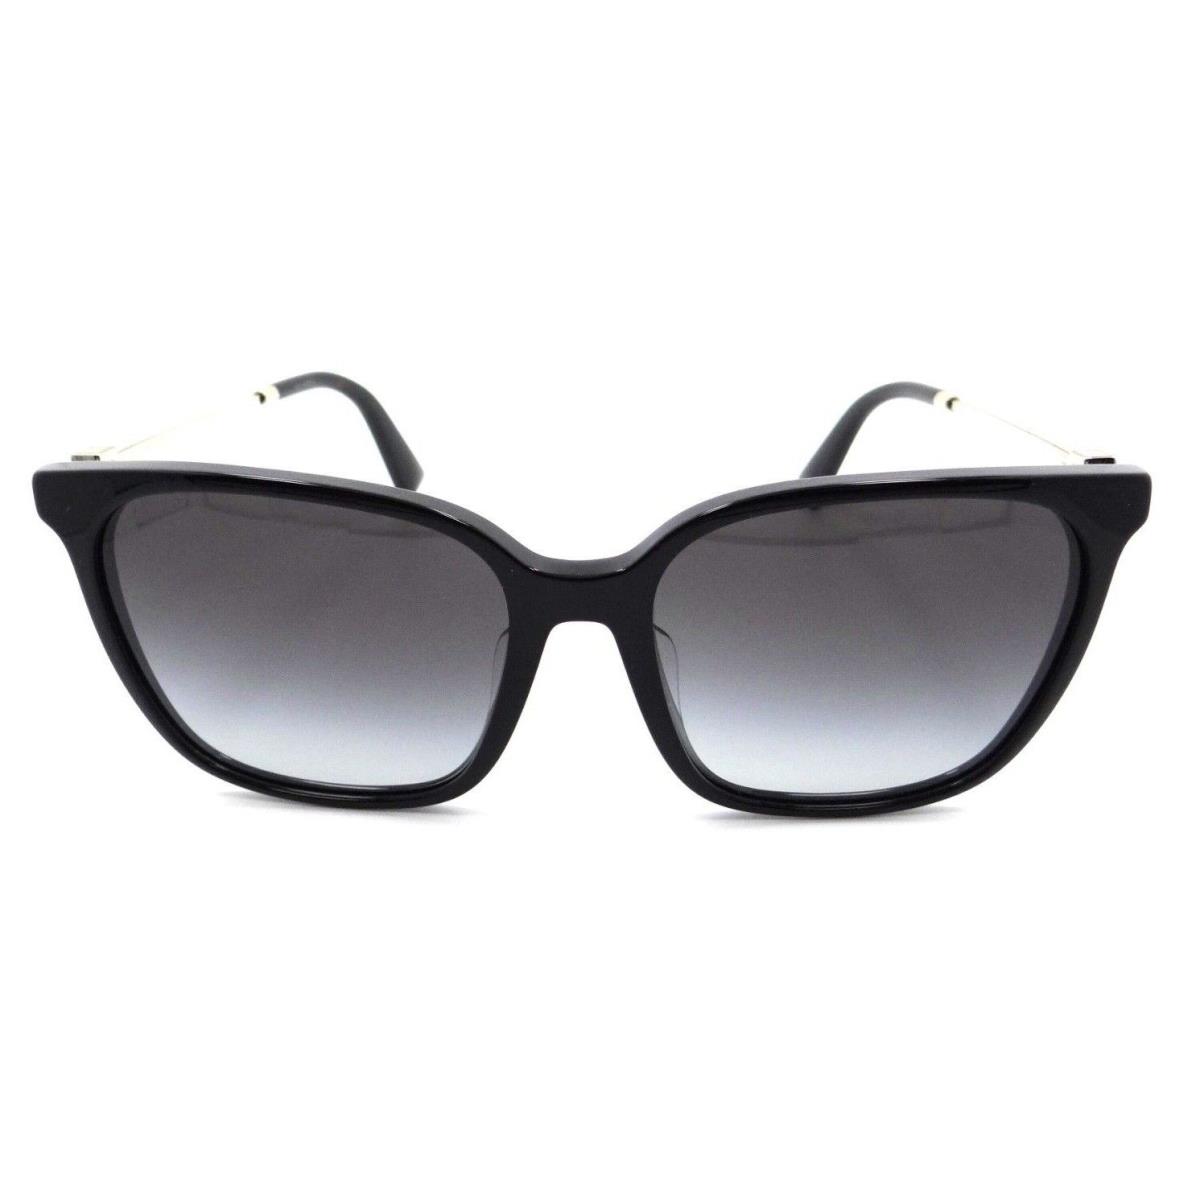 Valentino Sunglasses VA 4078F 5001/8G 57-17-140 Black / Grey Gradient Italy